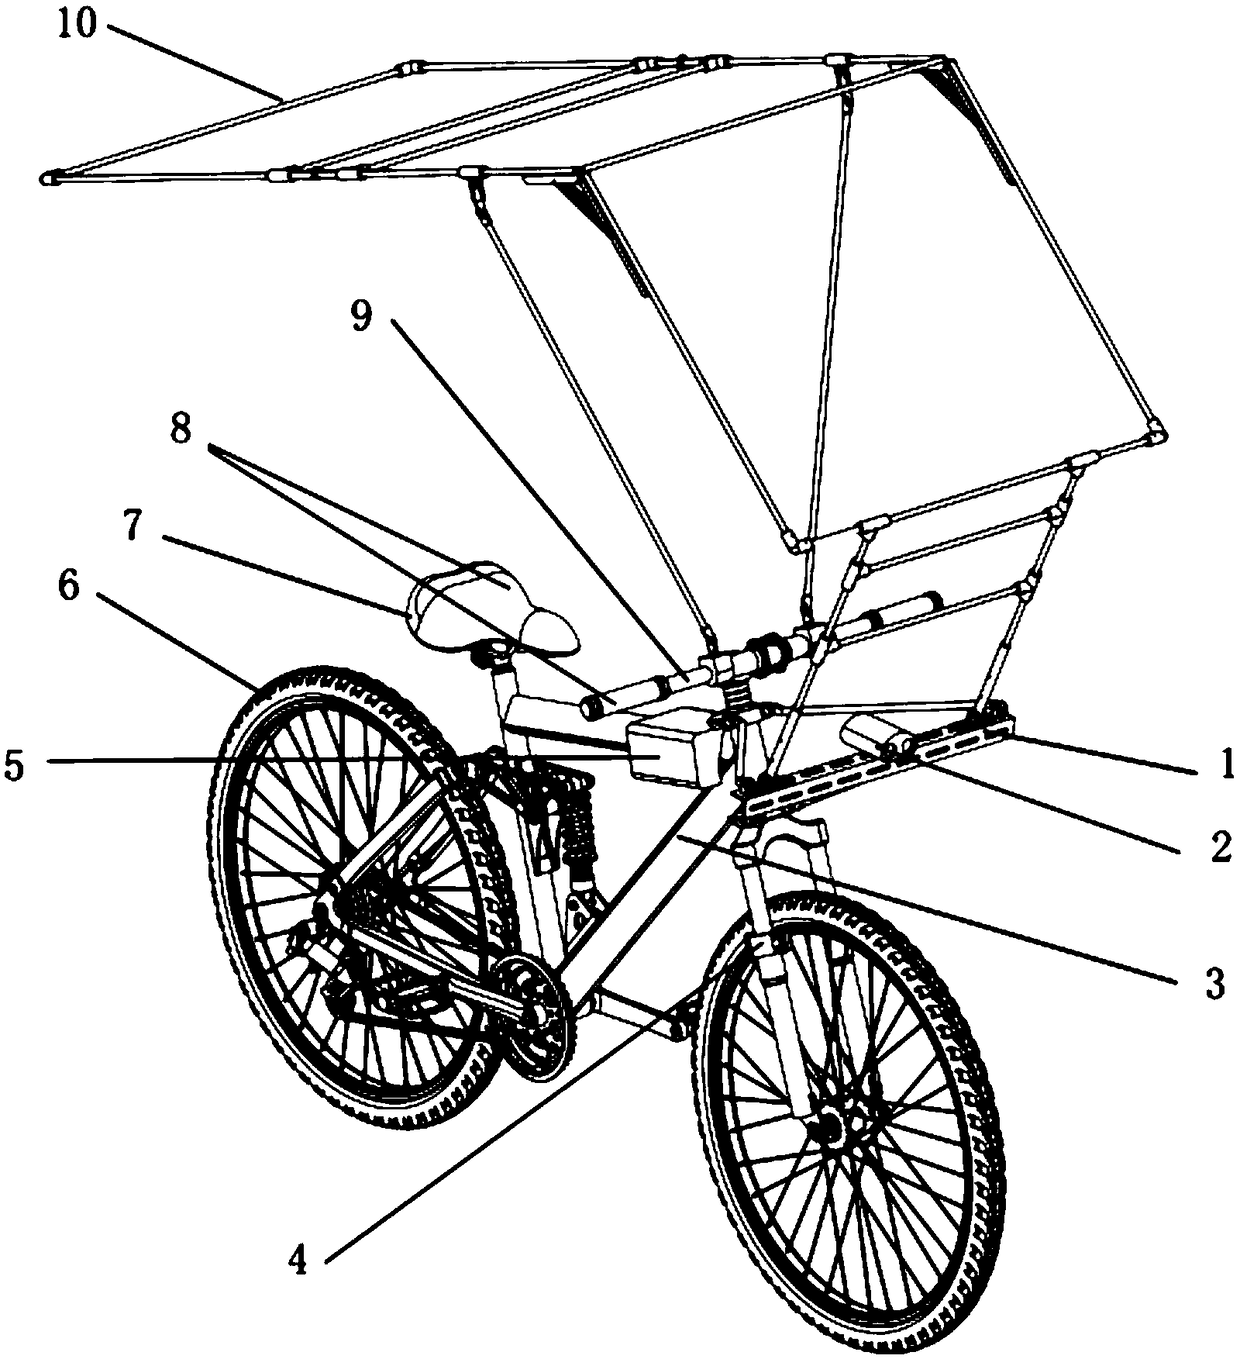 A multifunctional modular bicycle